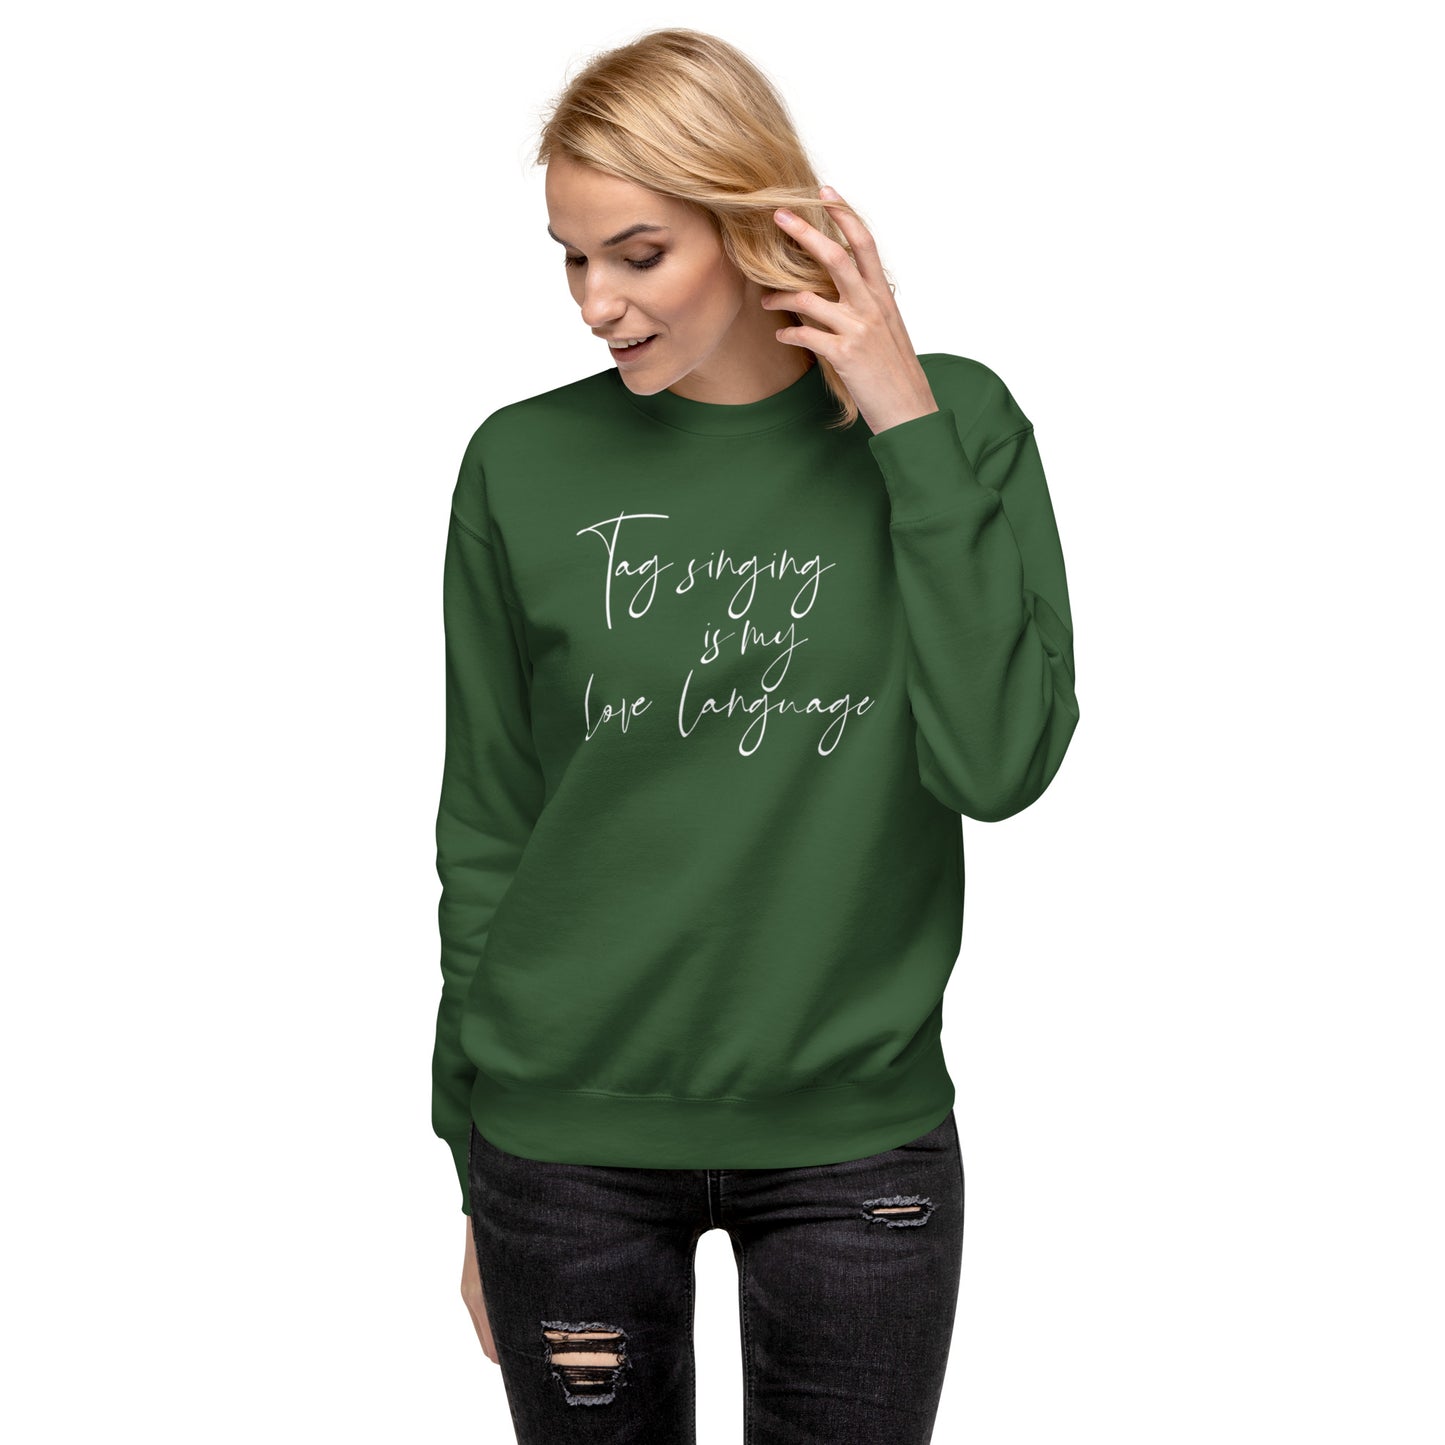 Tag singing is my love language - Unisex Premium Sweatshirt